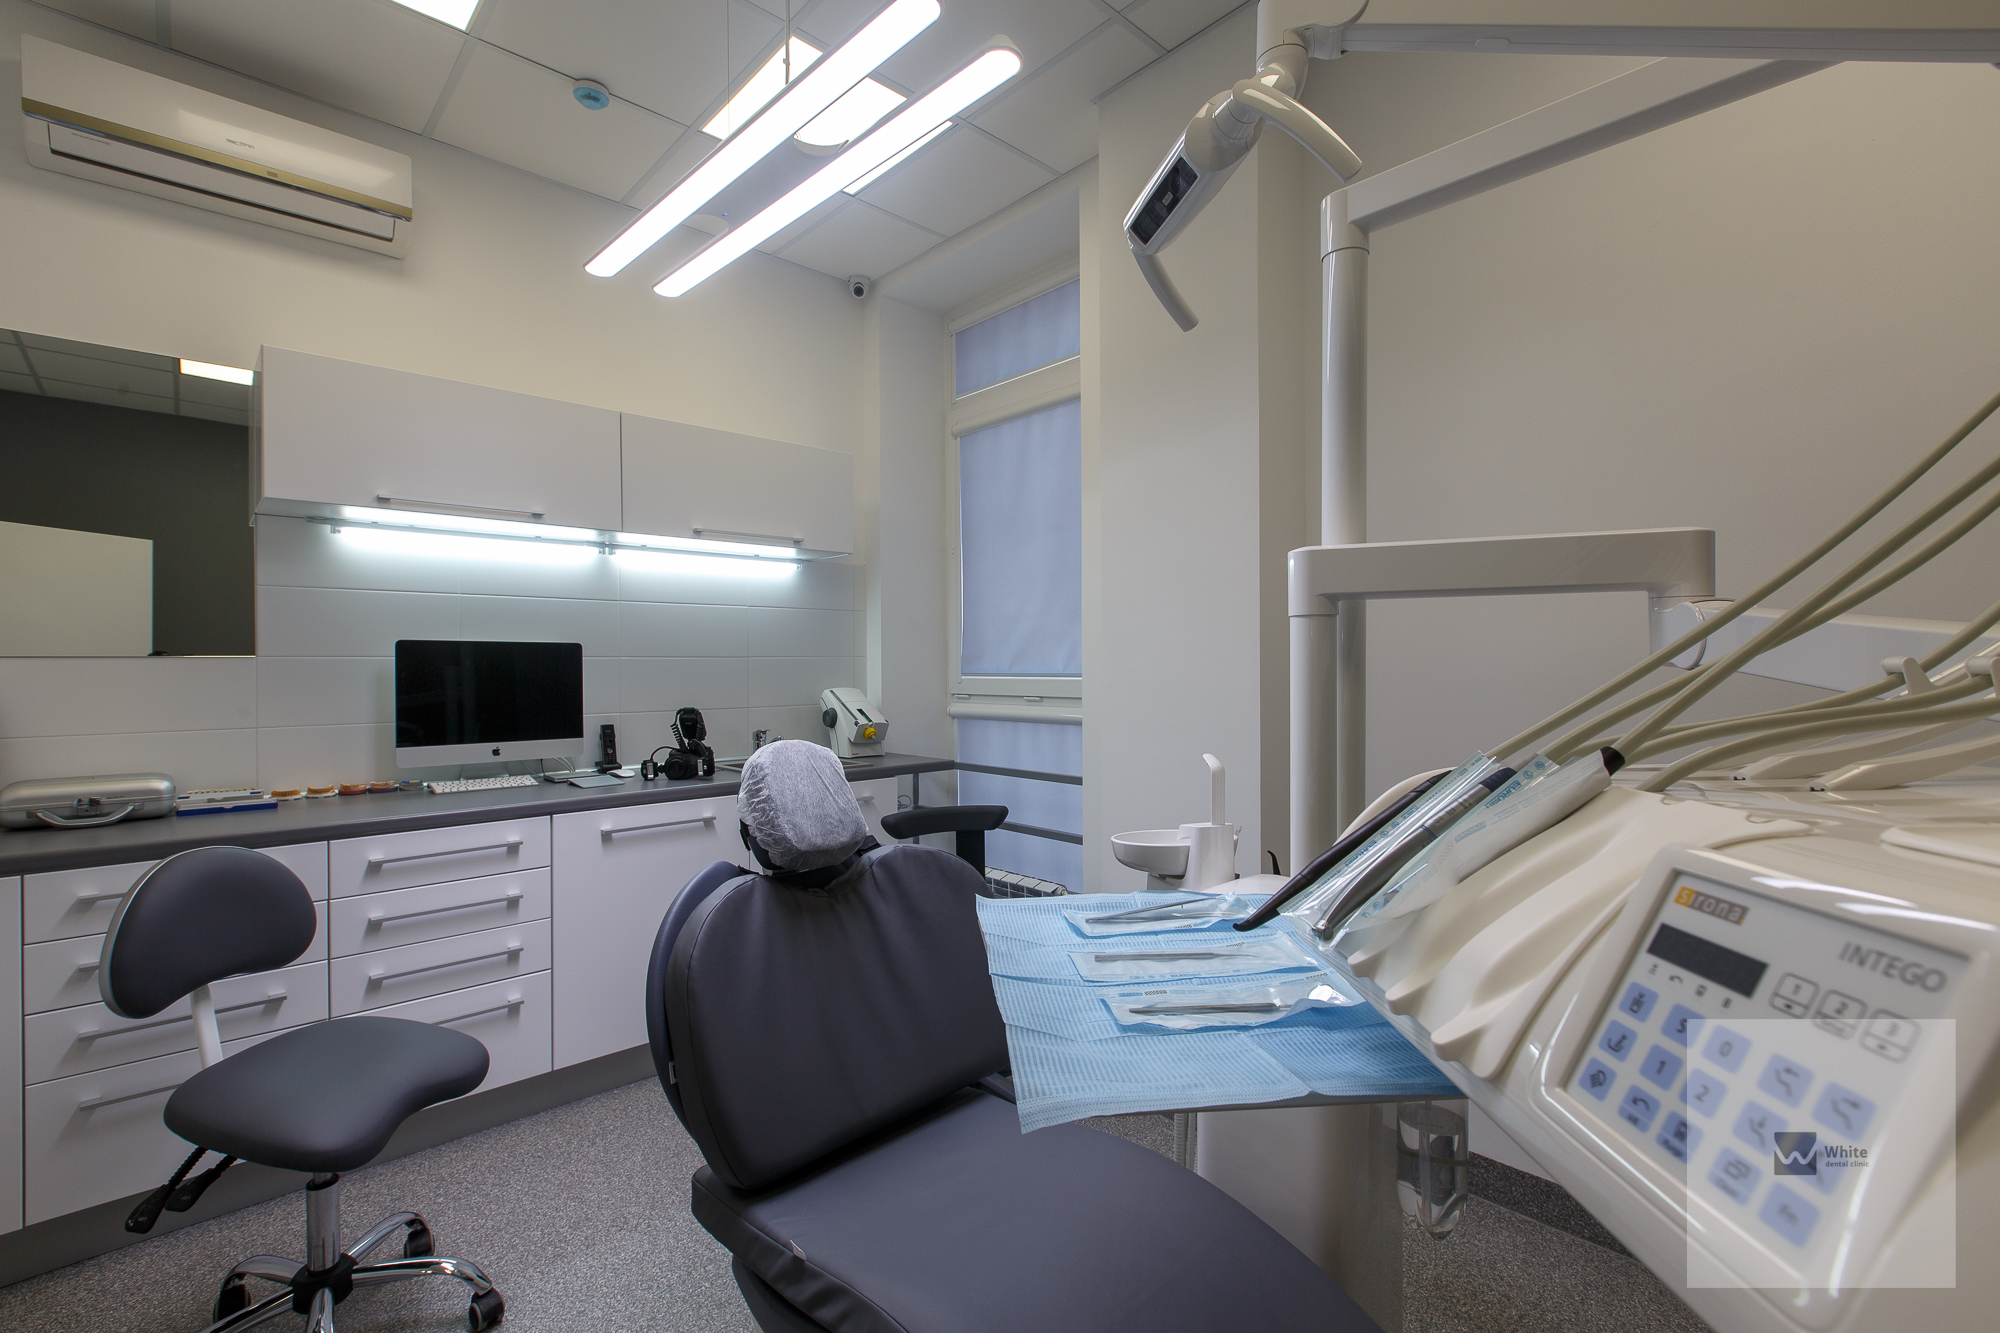 White dental clinic